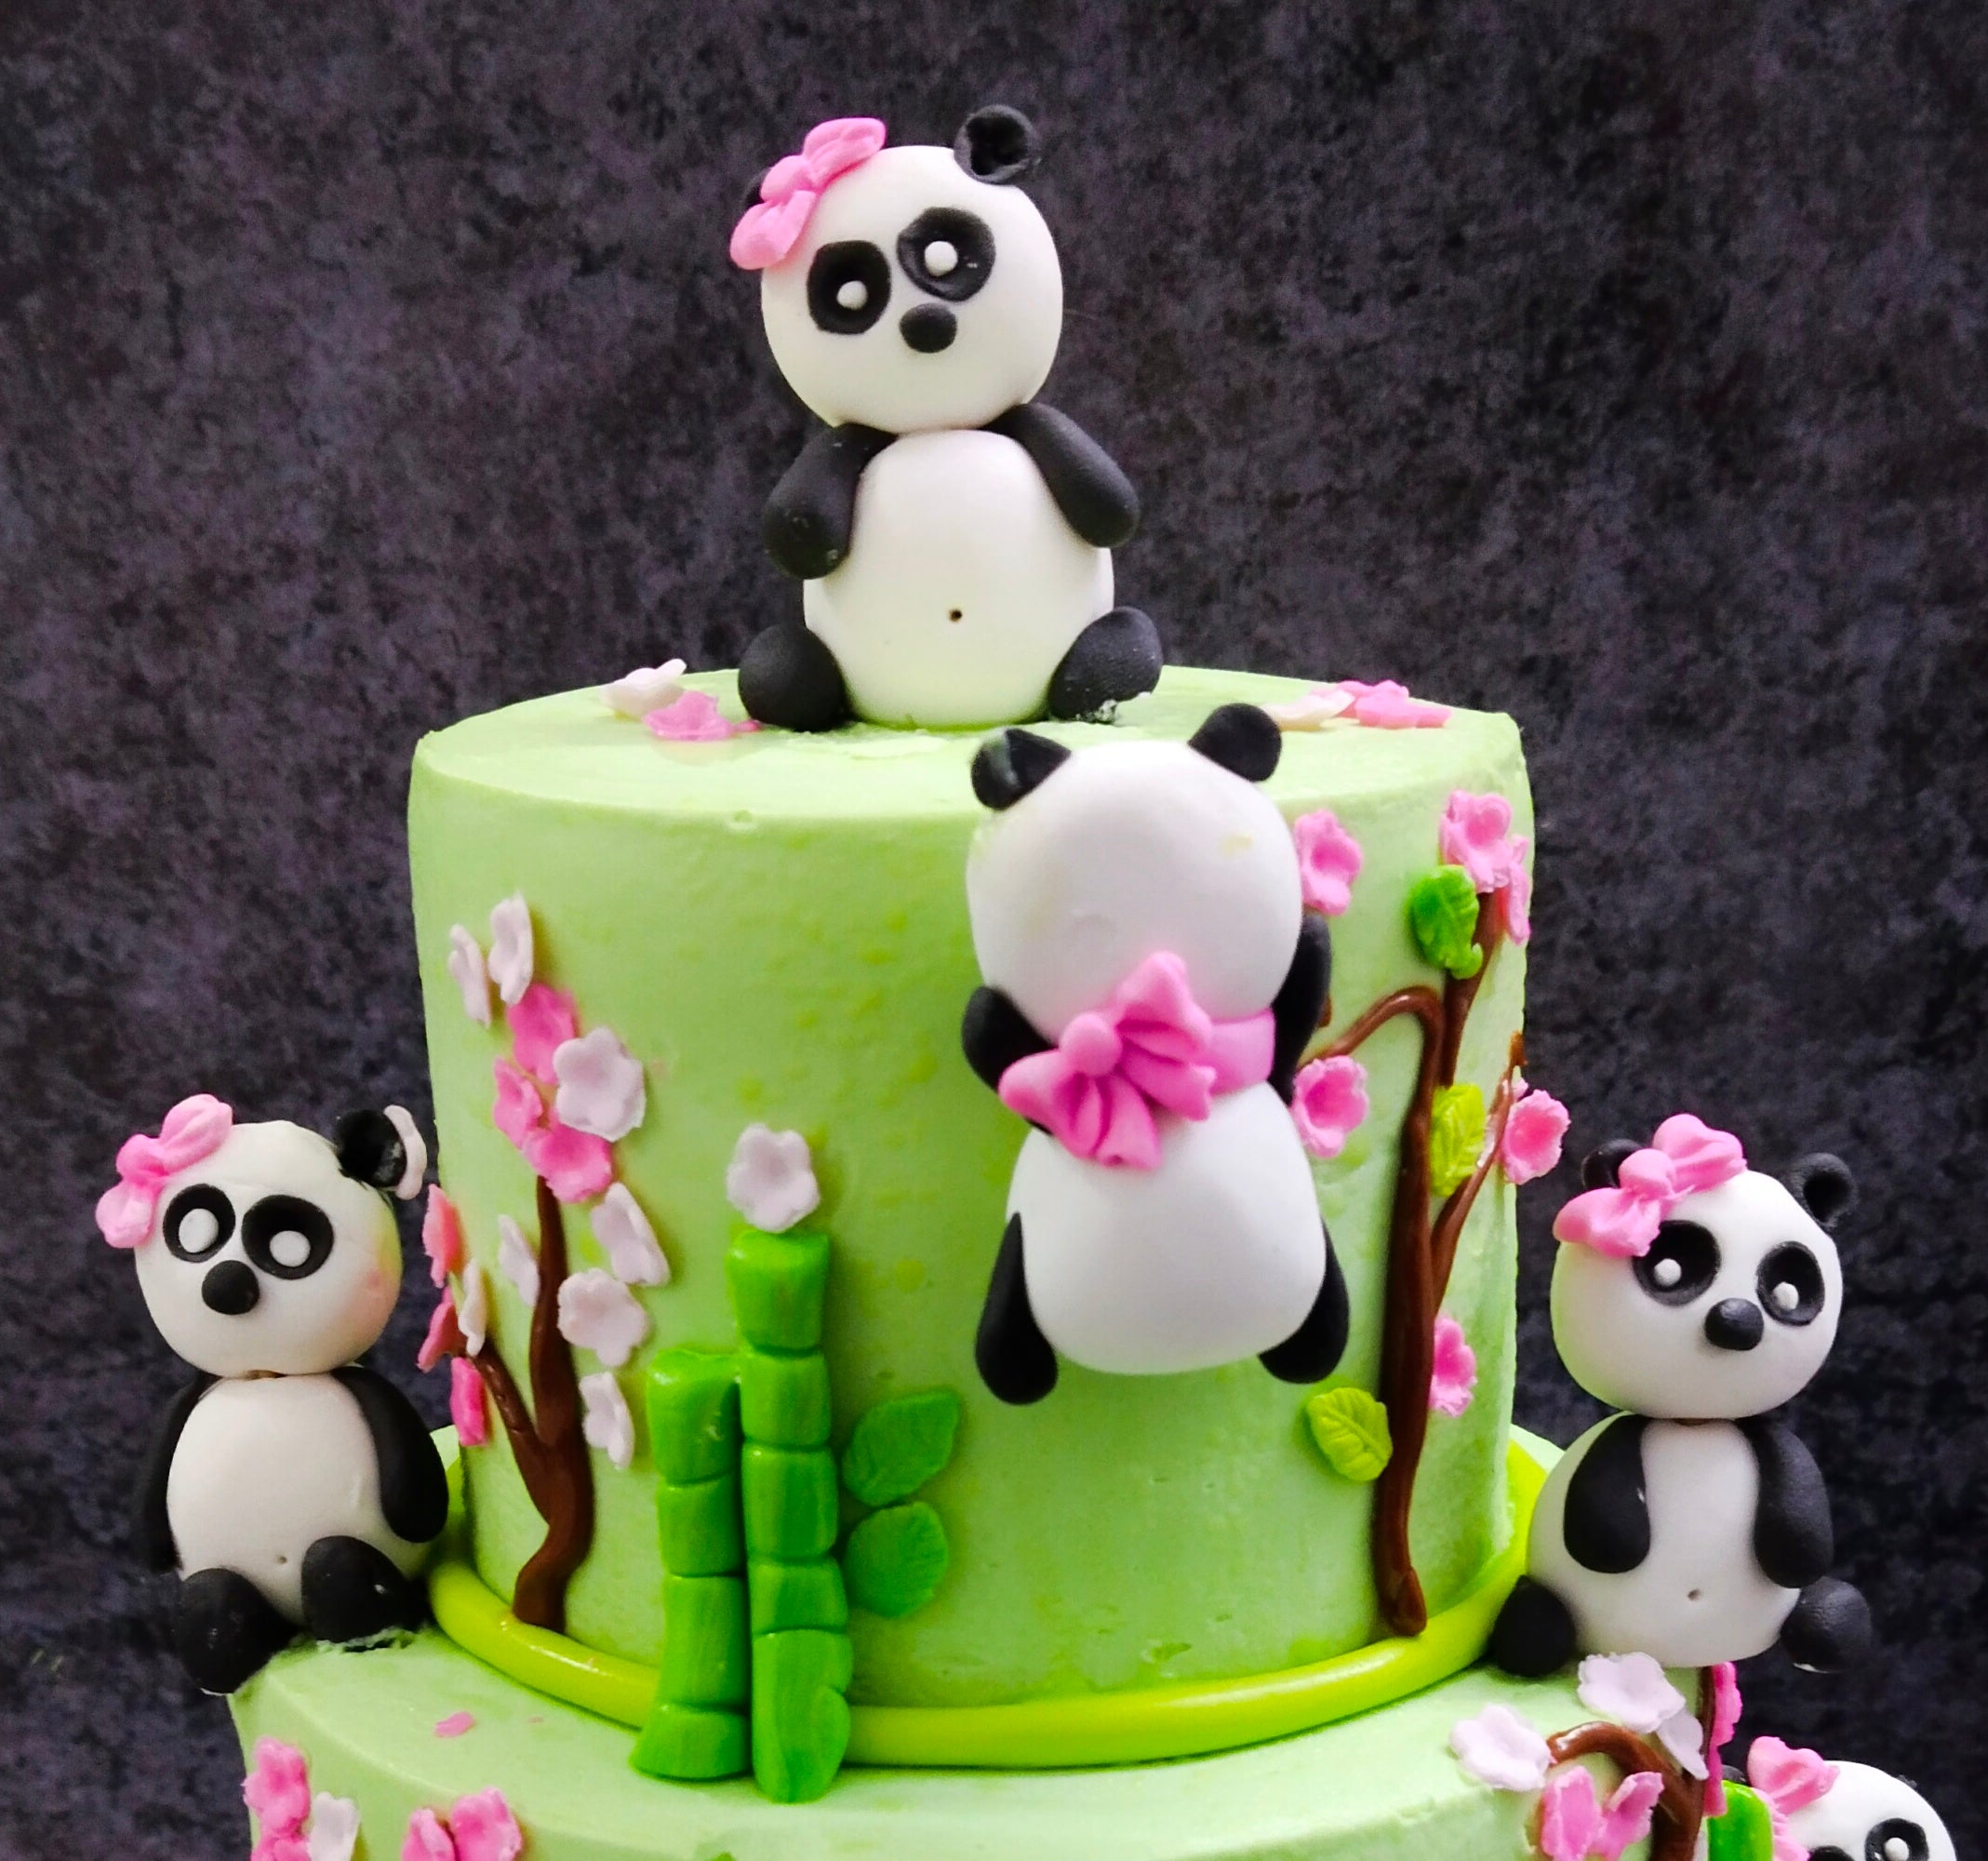 Panda With Bamboo Cake- Order Online Panda With Bamboo Cake @ Flavoursguru